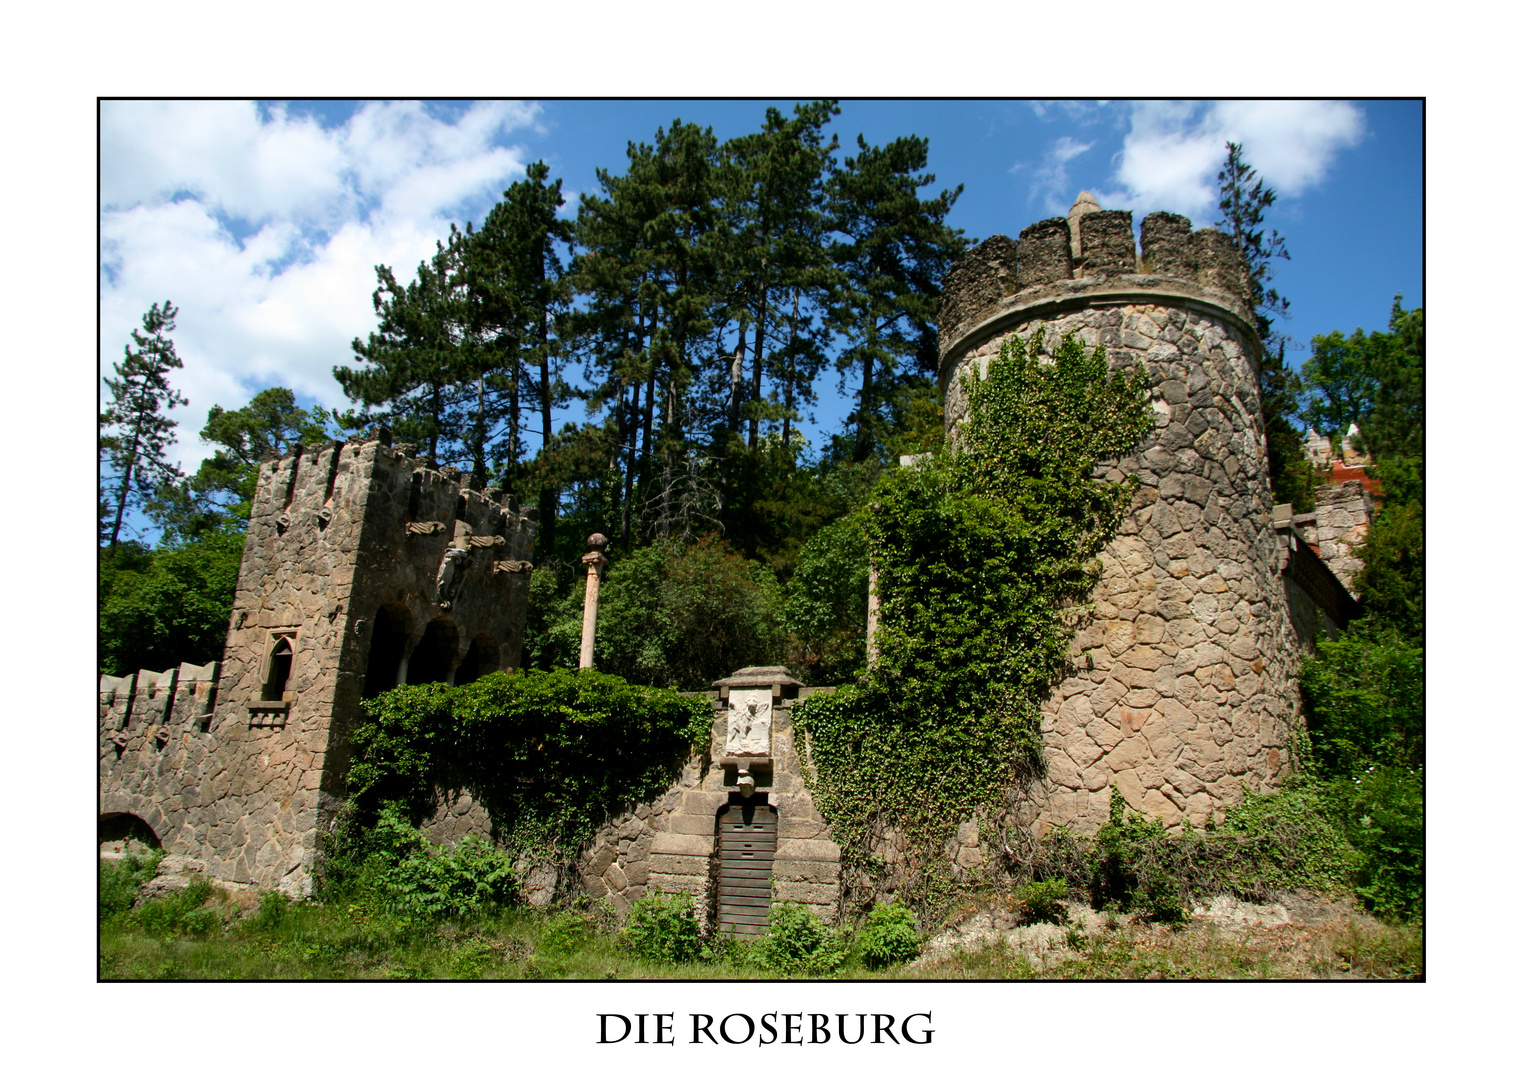 Märchenschloß - Die Roseburg